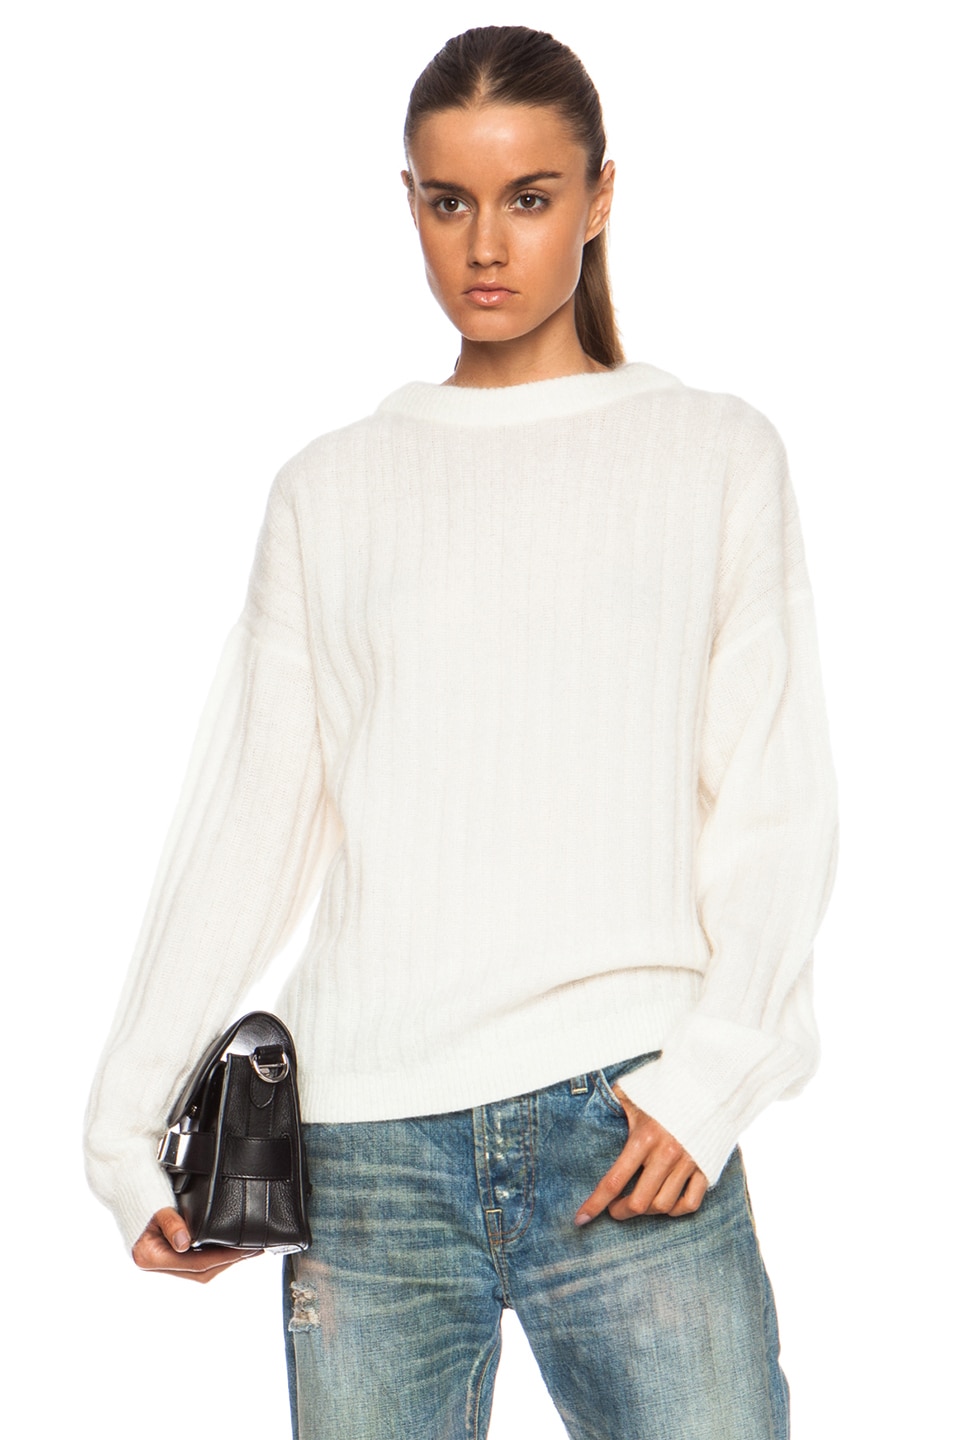 Acne Studios Dramatic Mohair-Blend Sweater in White | FWRD